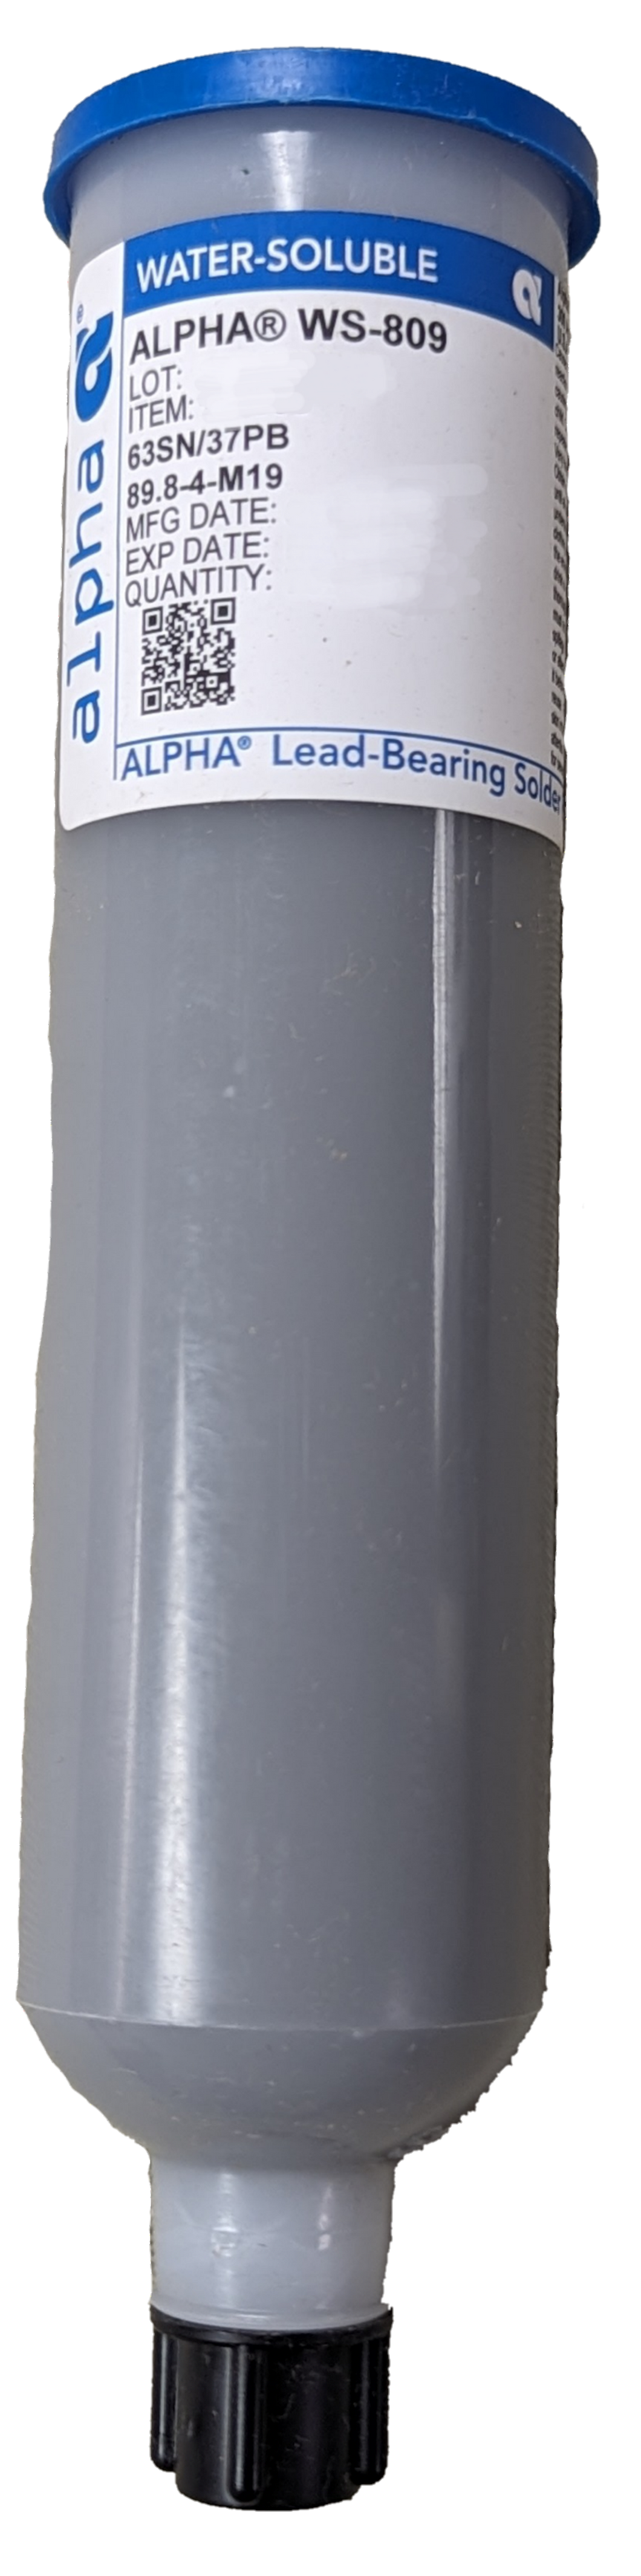 Alpha WS-809 Solder Paste, 63/37, T3, Water-Soluble, Leaded (700g Cartridge)